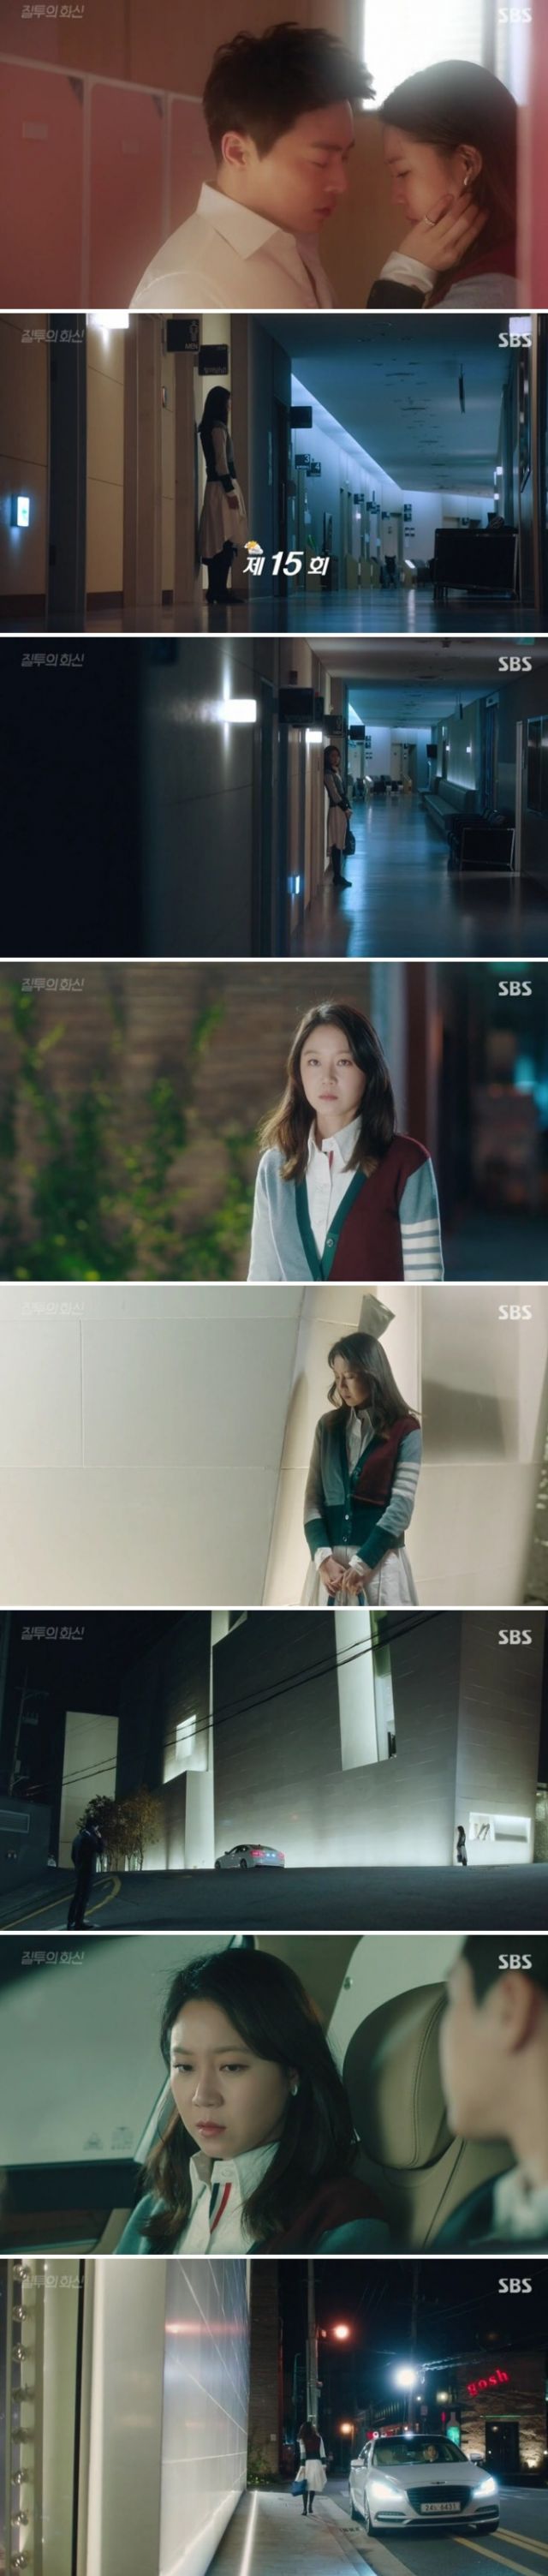 episode 15 captures for the Korean drama 'Incarnation of Jealousy'